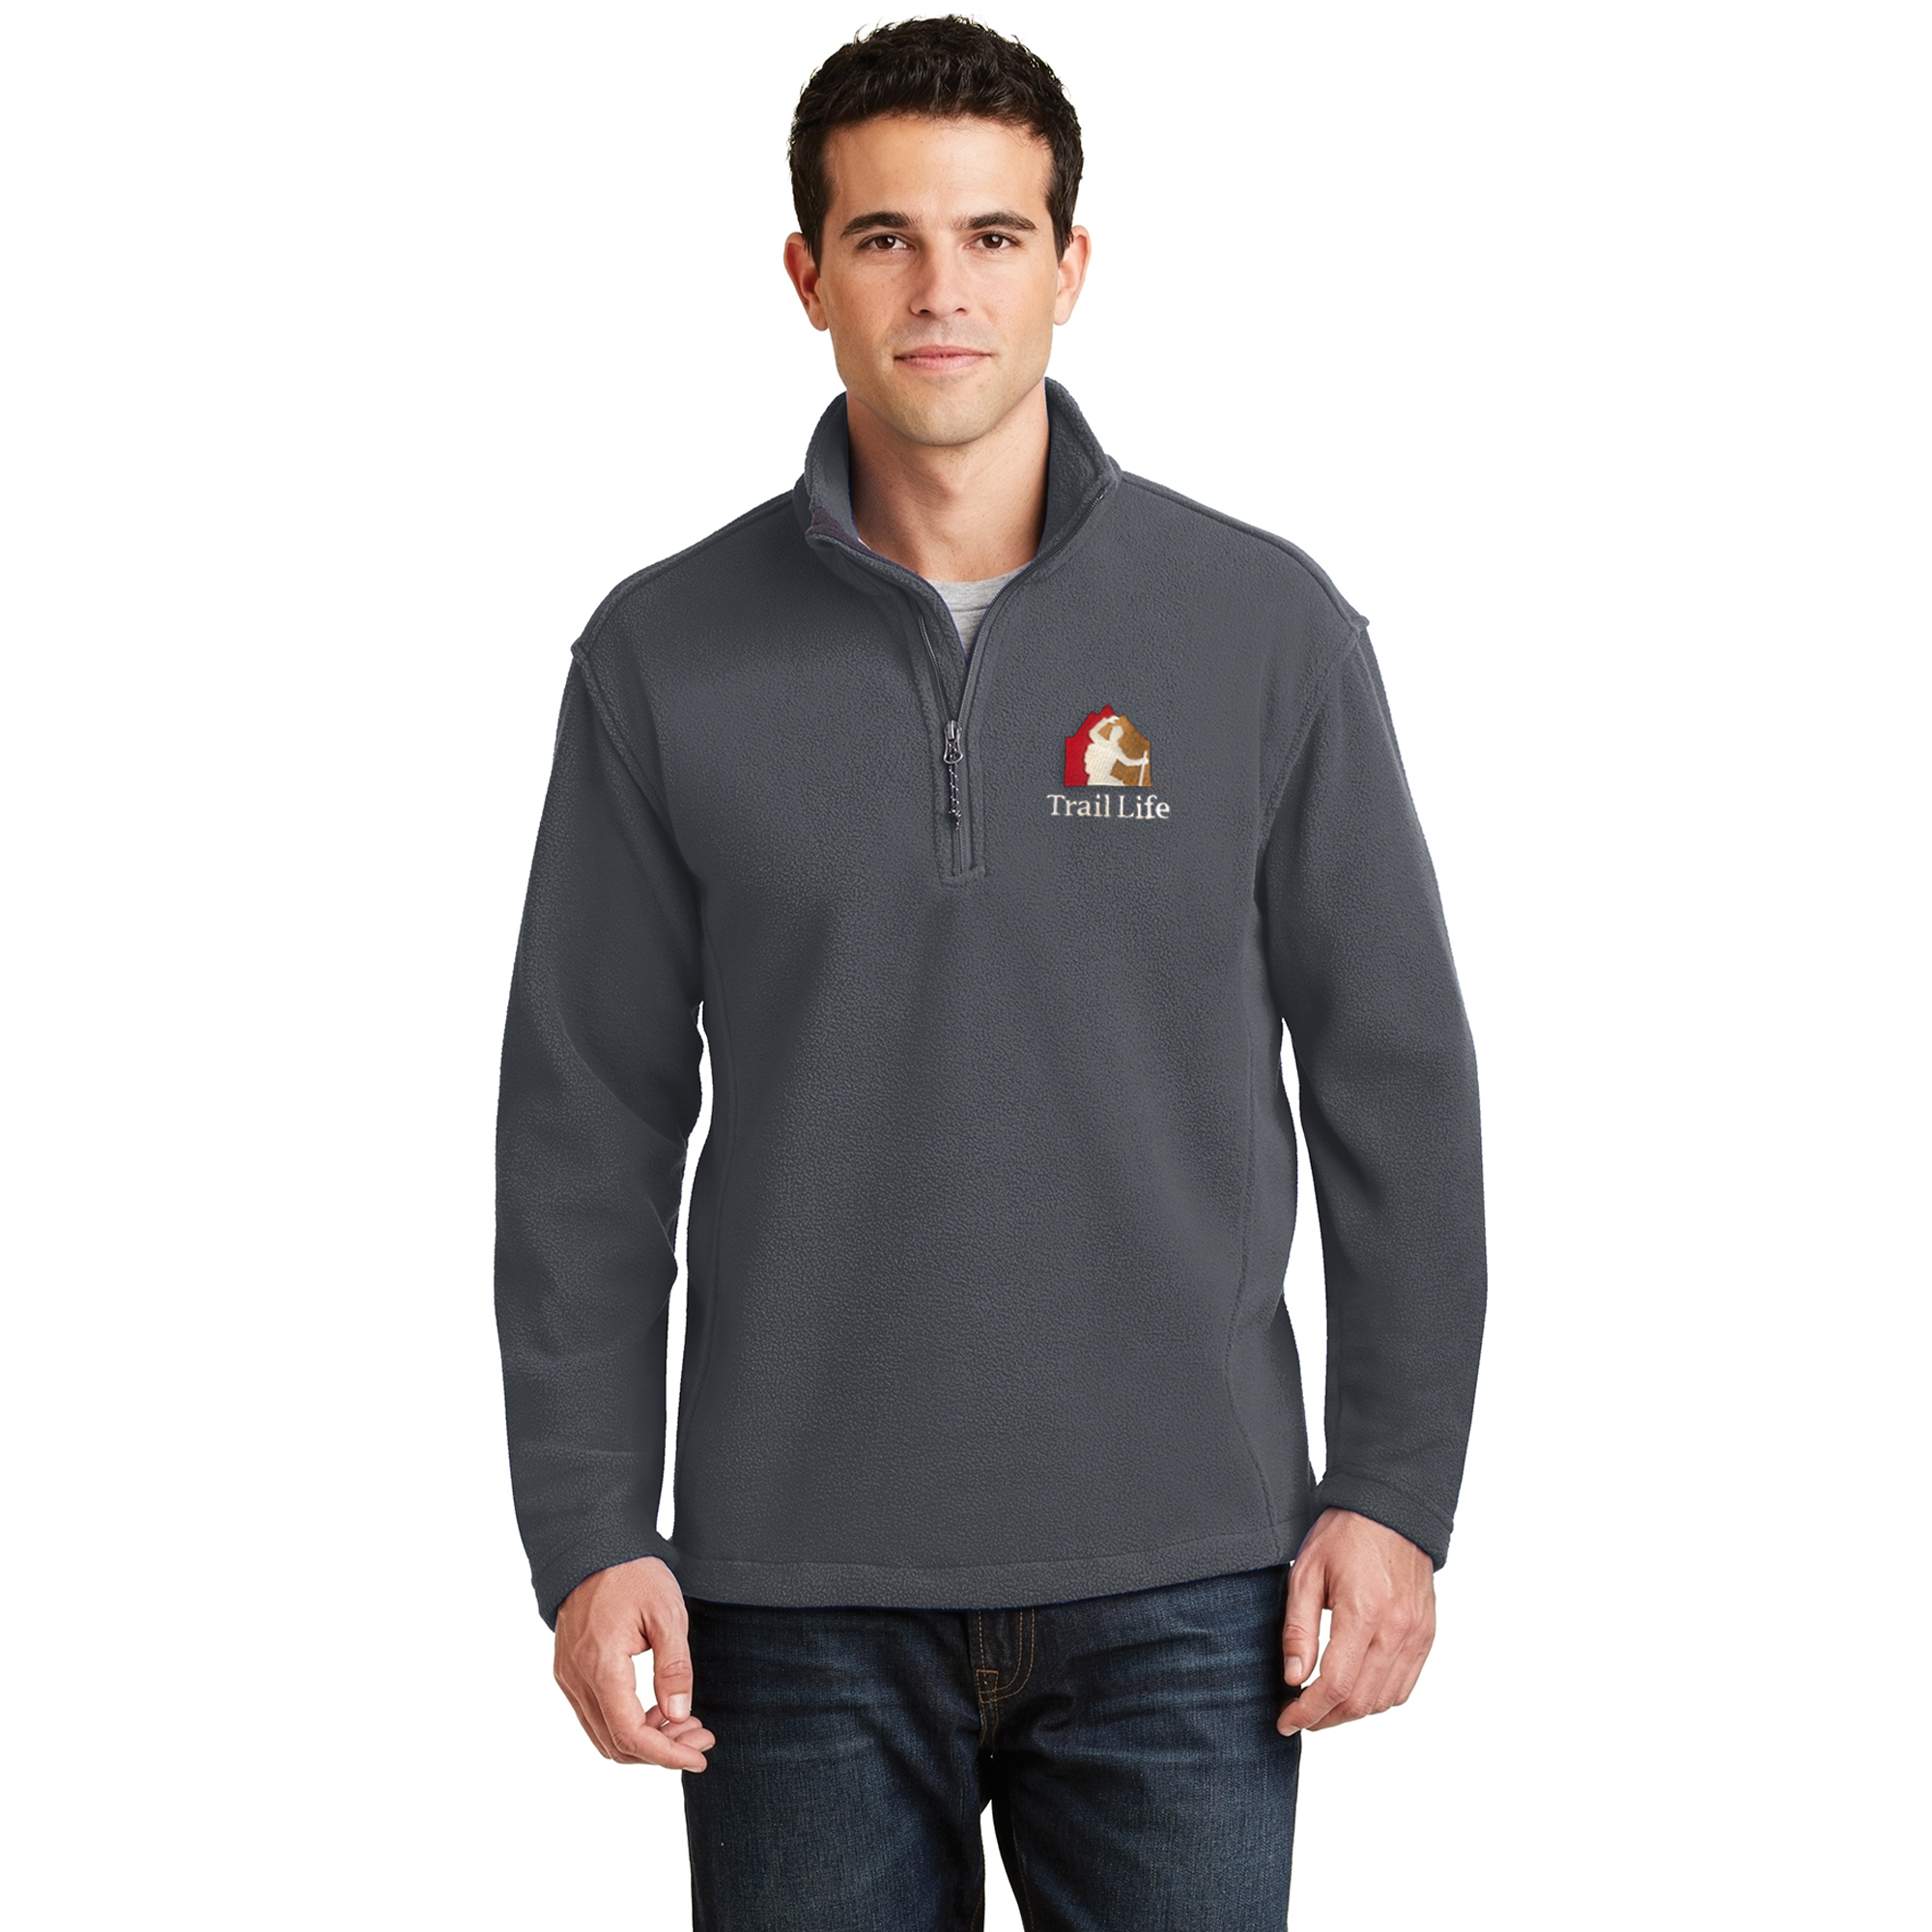 Men's Quarter-Zip Fleece Jacket - Official Logo | Trail Life USA